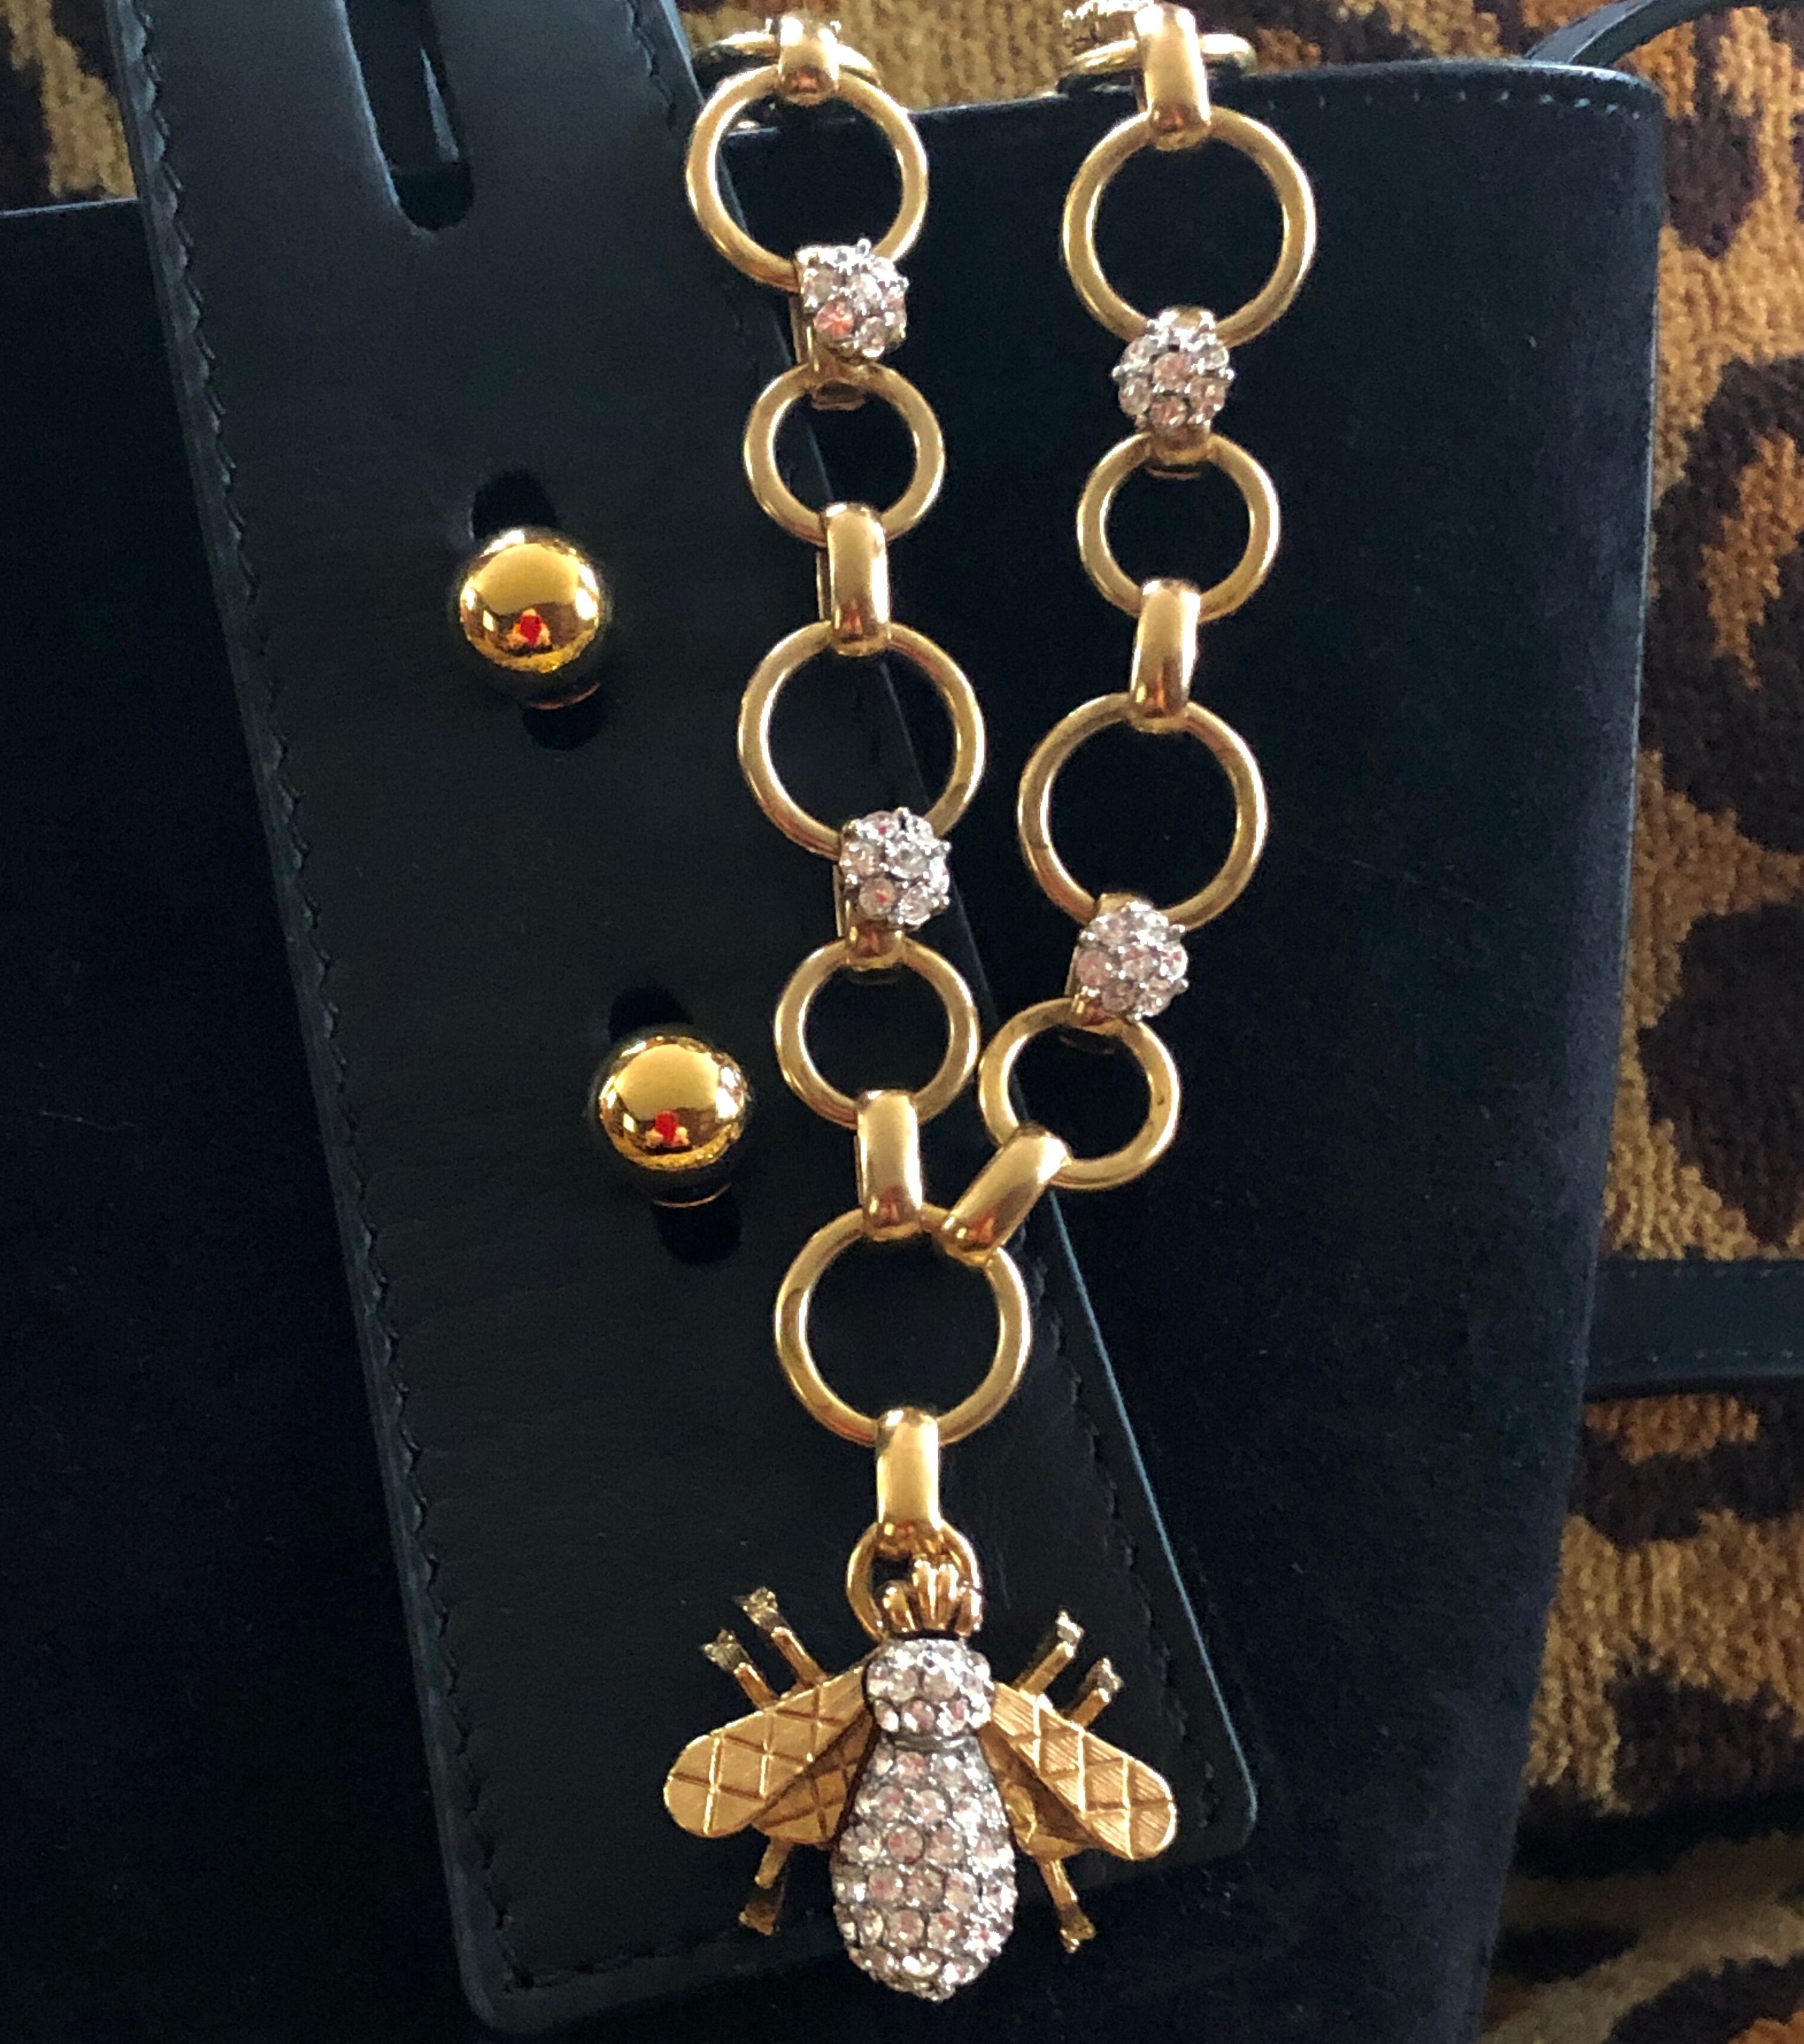 Crystal Bee Necklace – Carolyne Roehm